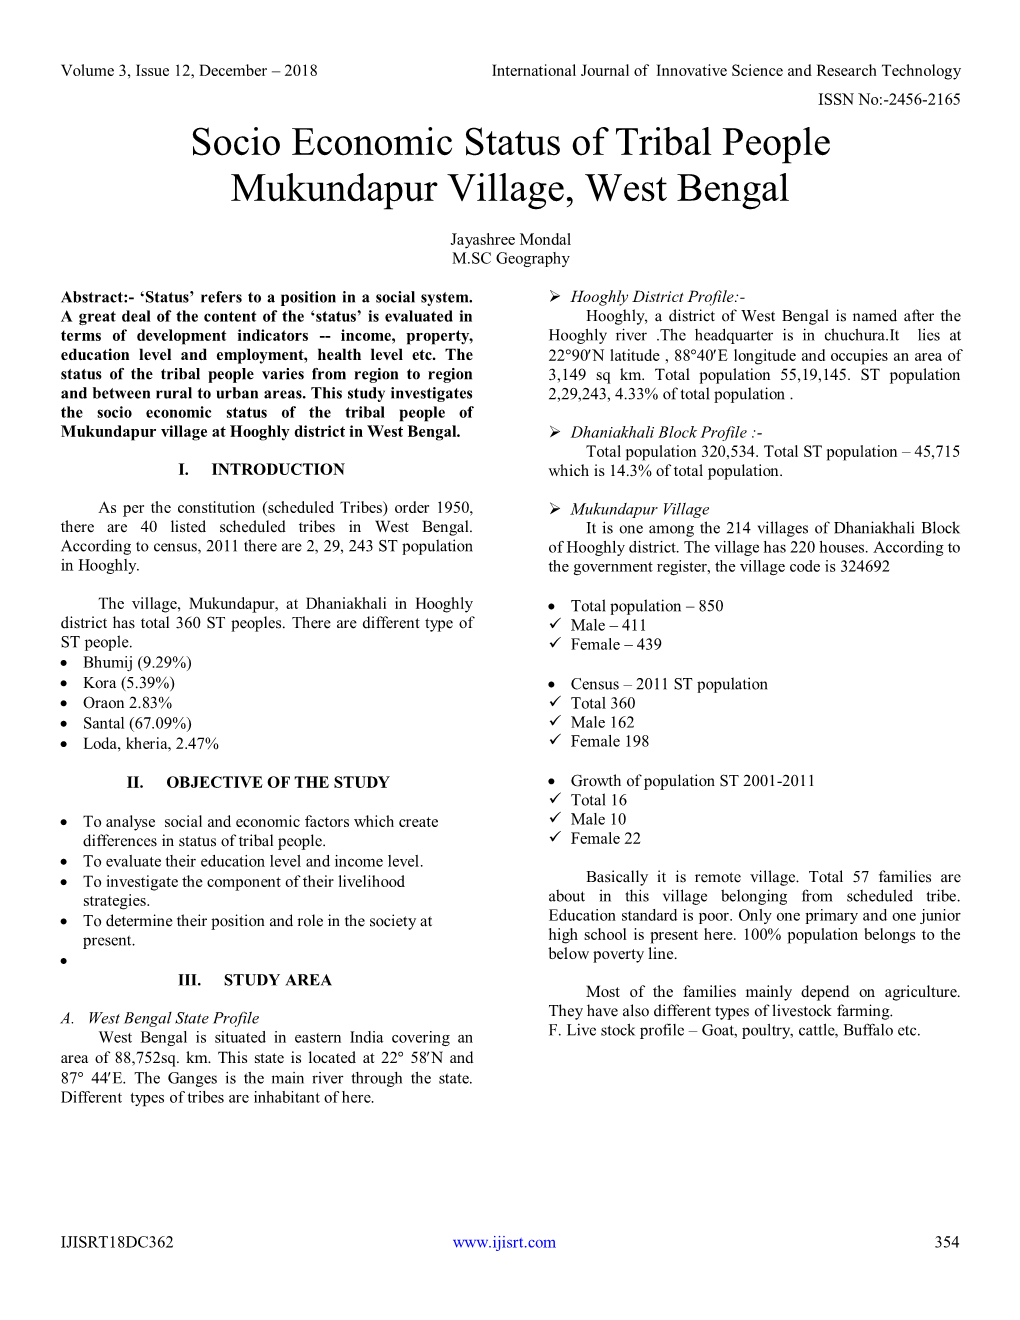 Socio Economic Status of Tribal People Mukundapur Village, West Bengal